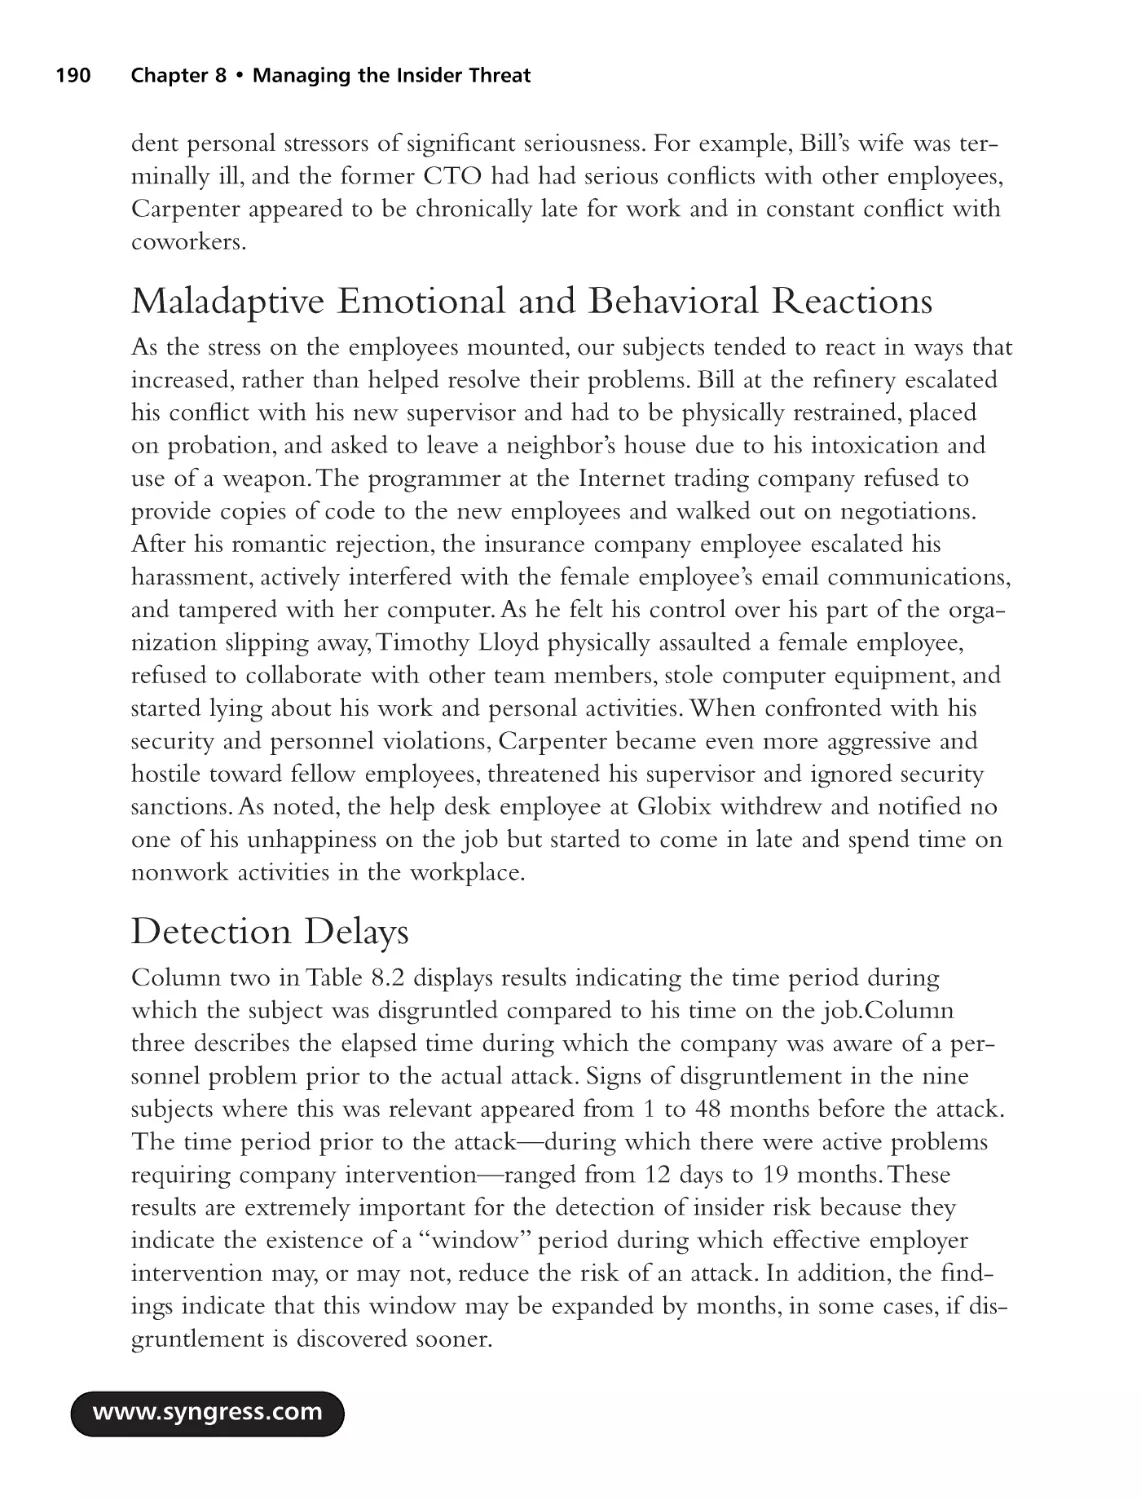 Maladaptive Emotional and Behavioral Reactions
Detection Delays